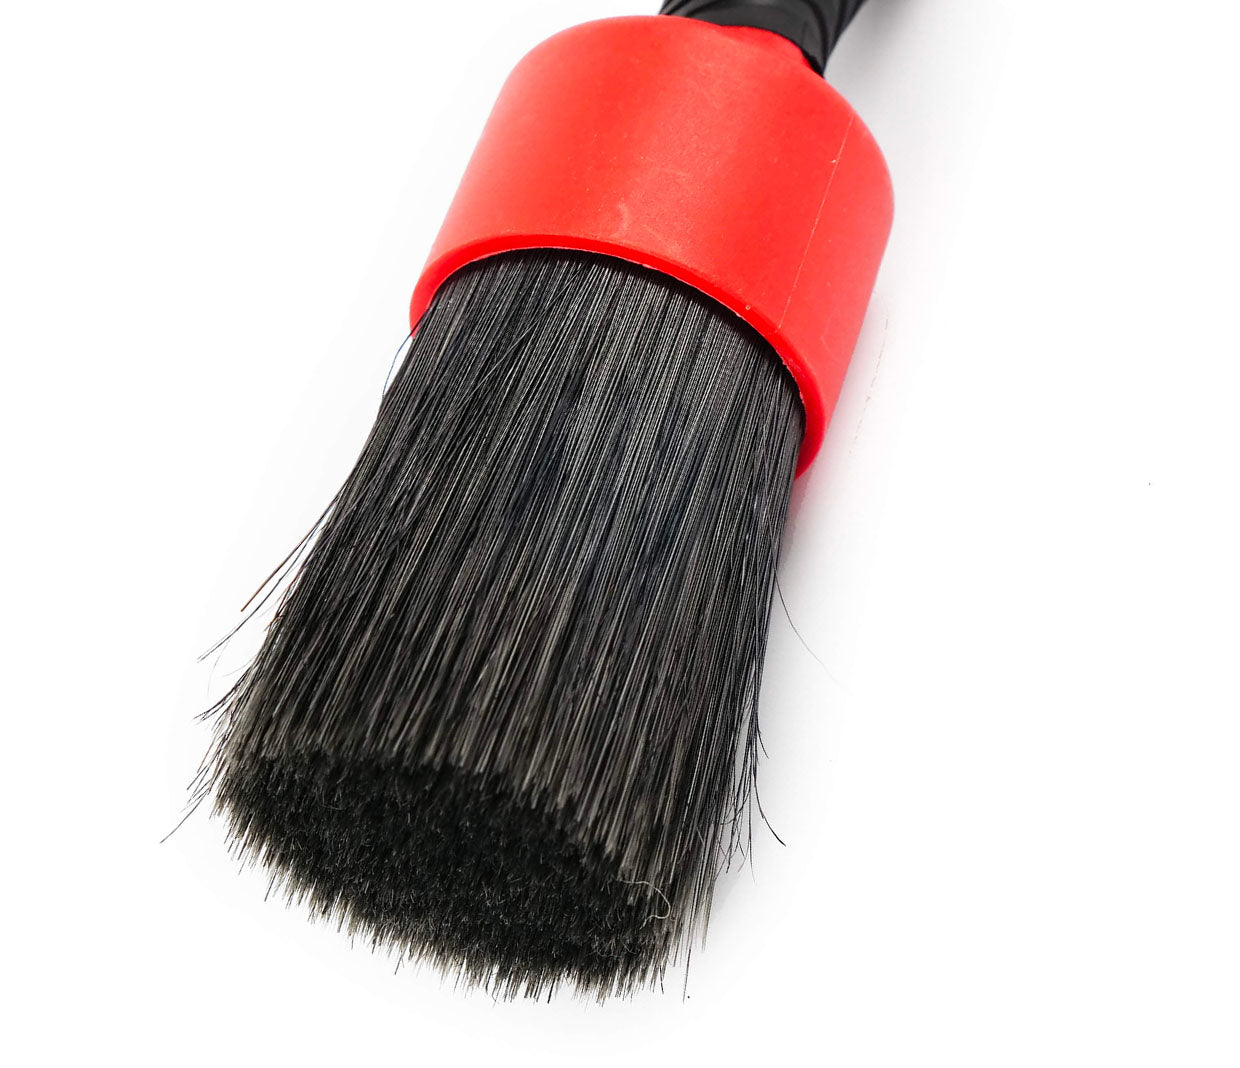 Maxshine Mixed Bristle Detailing Stubby Brush - Red